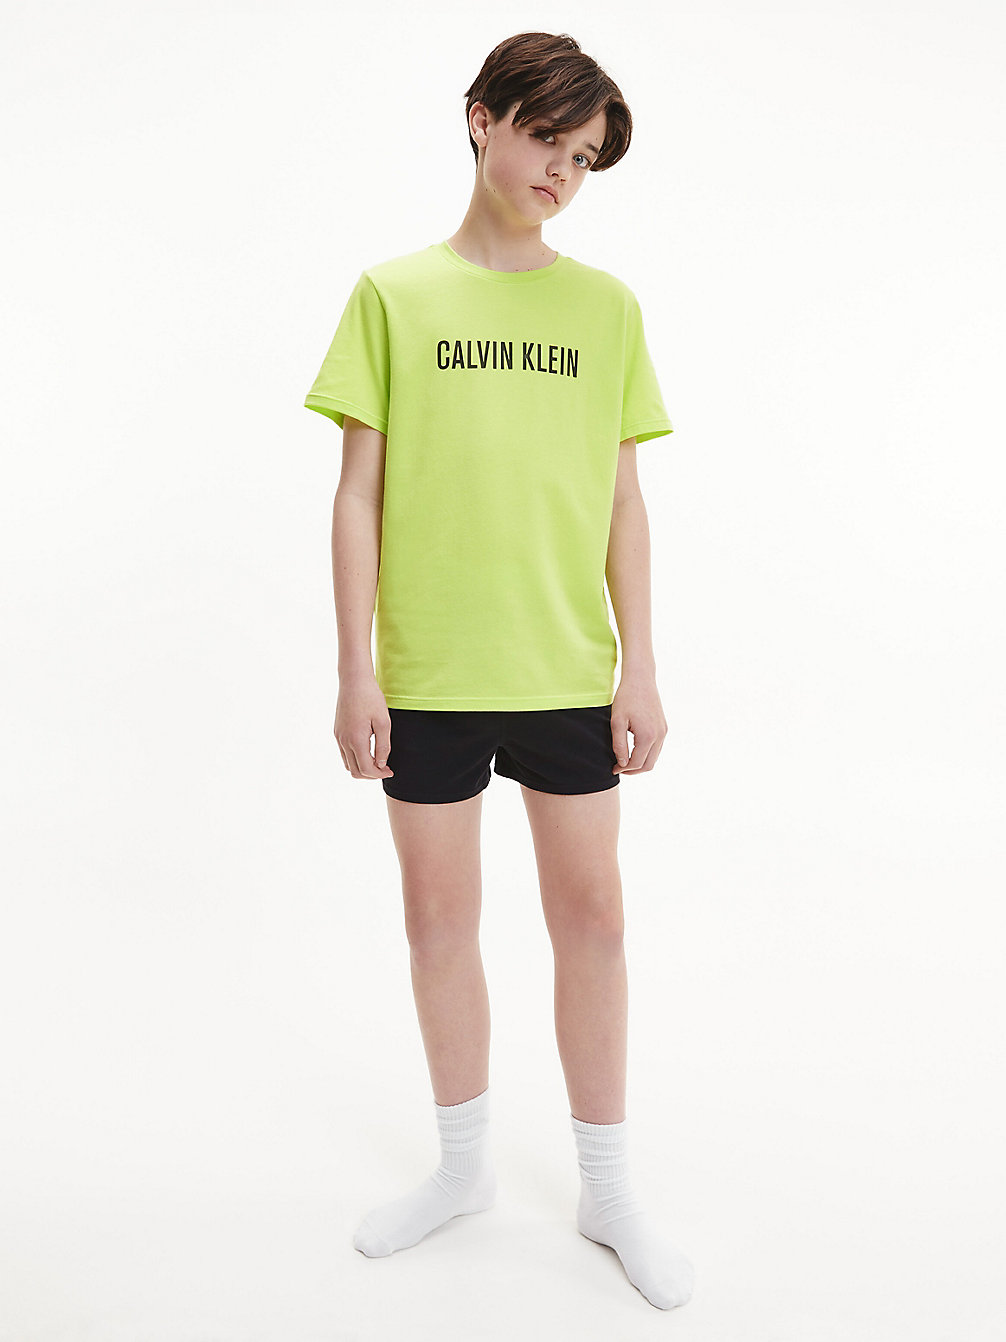 SOURLIME/W/PVHBLACK > Пижама с шортами - Intense Power > undefined boys - Calvin Klein